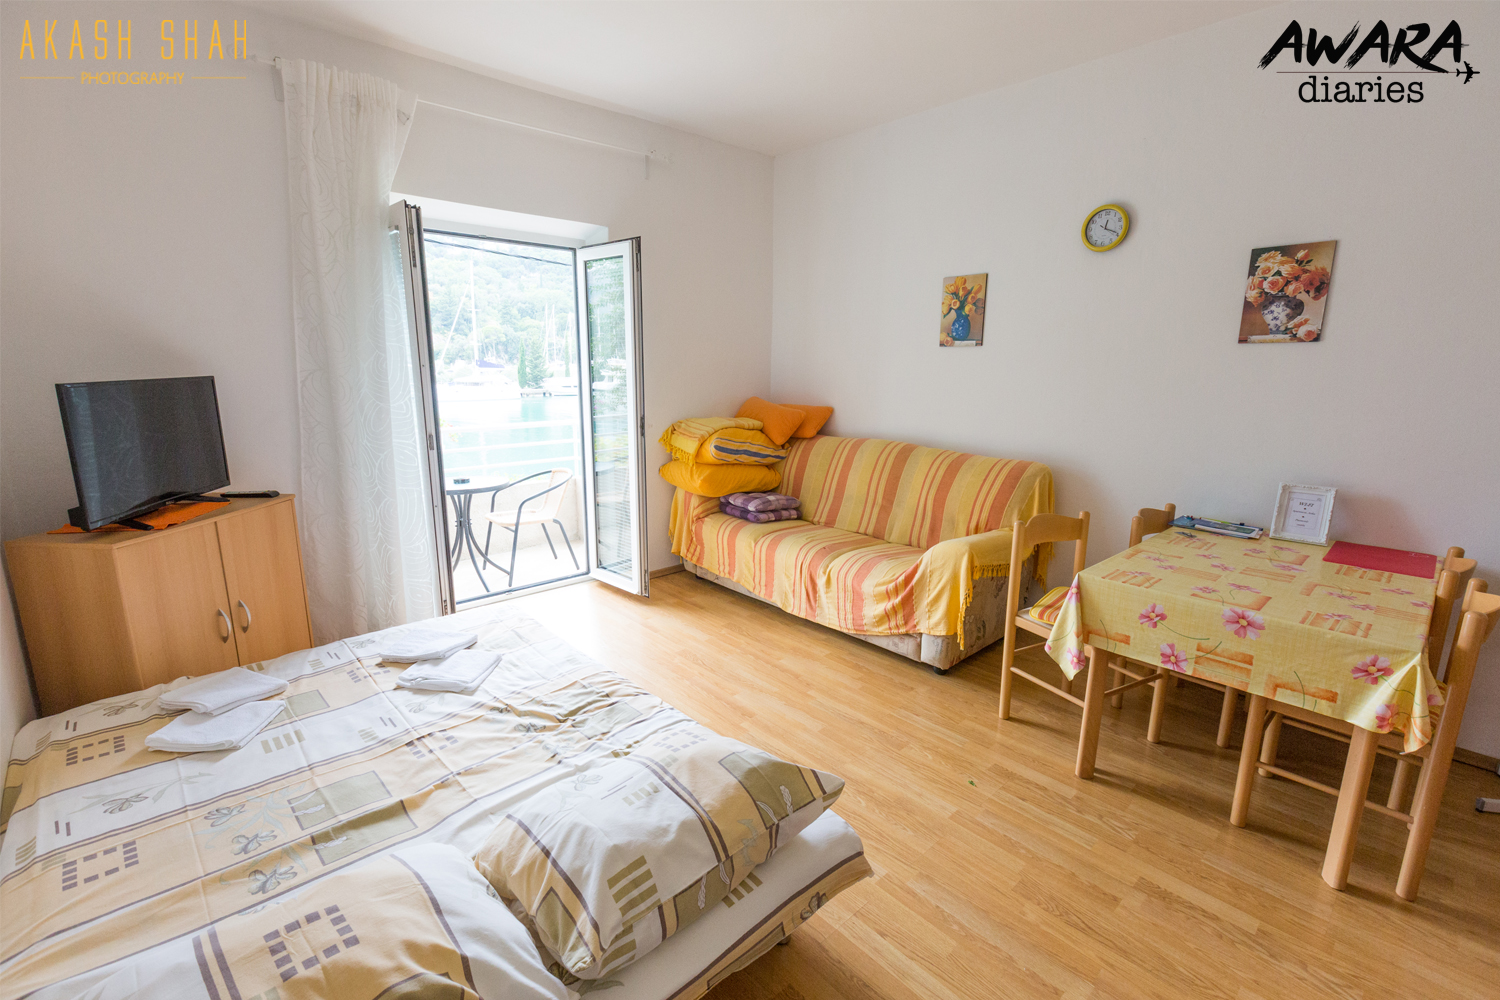 Anka's Apartment: Cozy Stay Near Dubrovnik